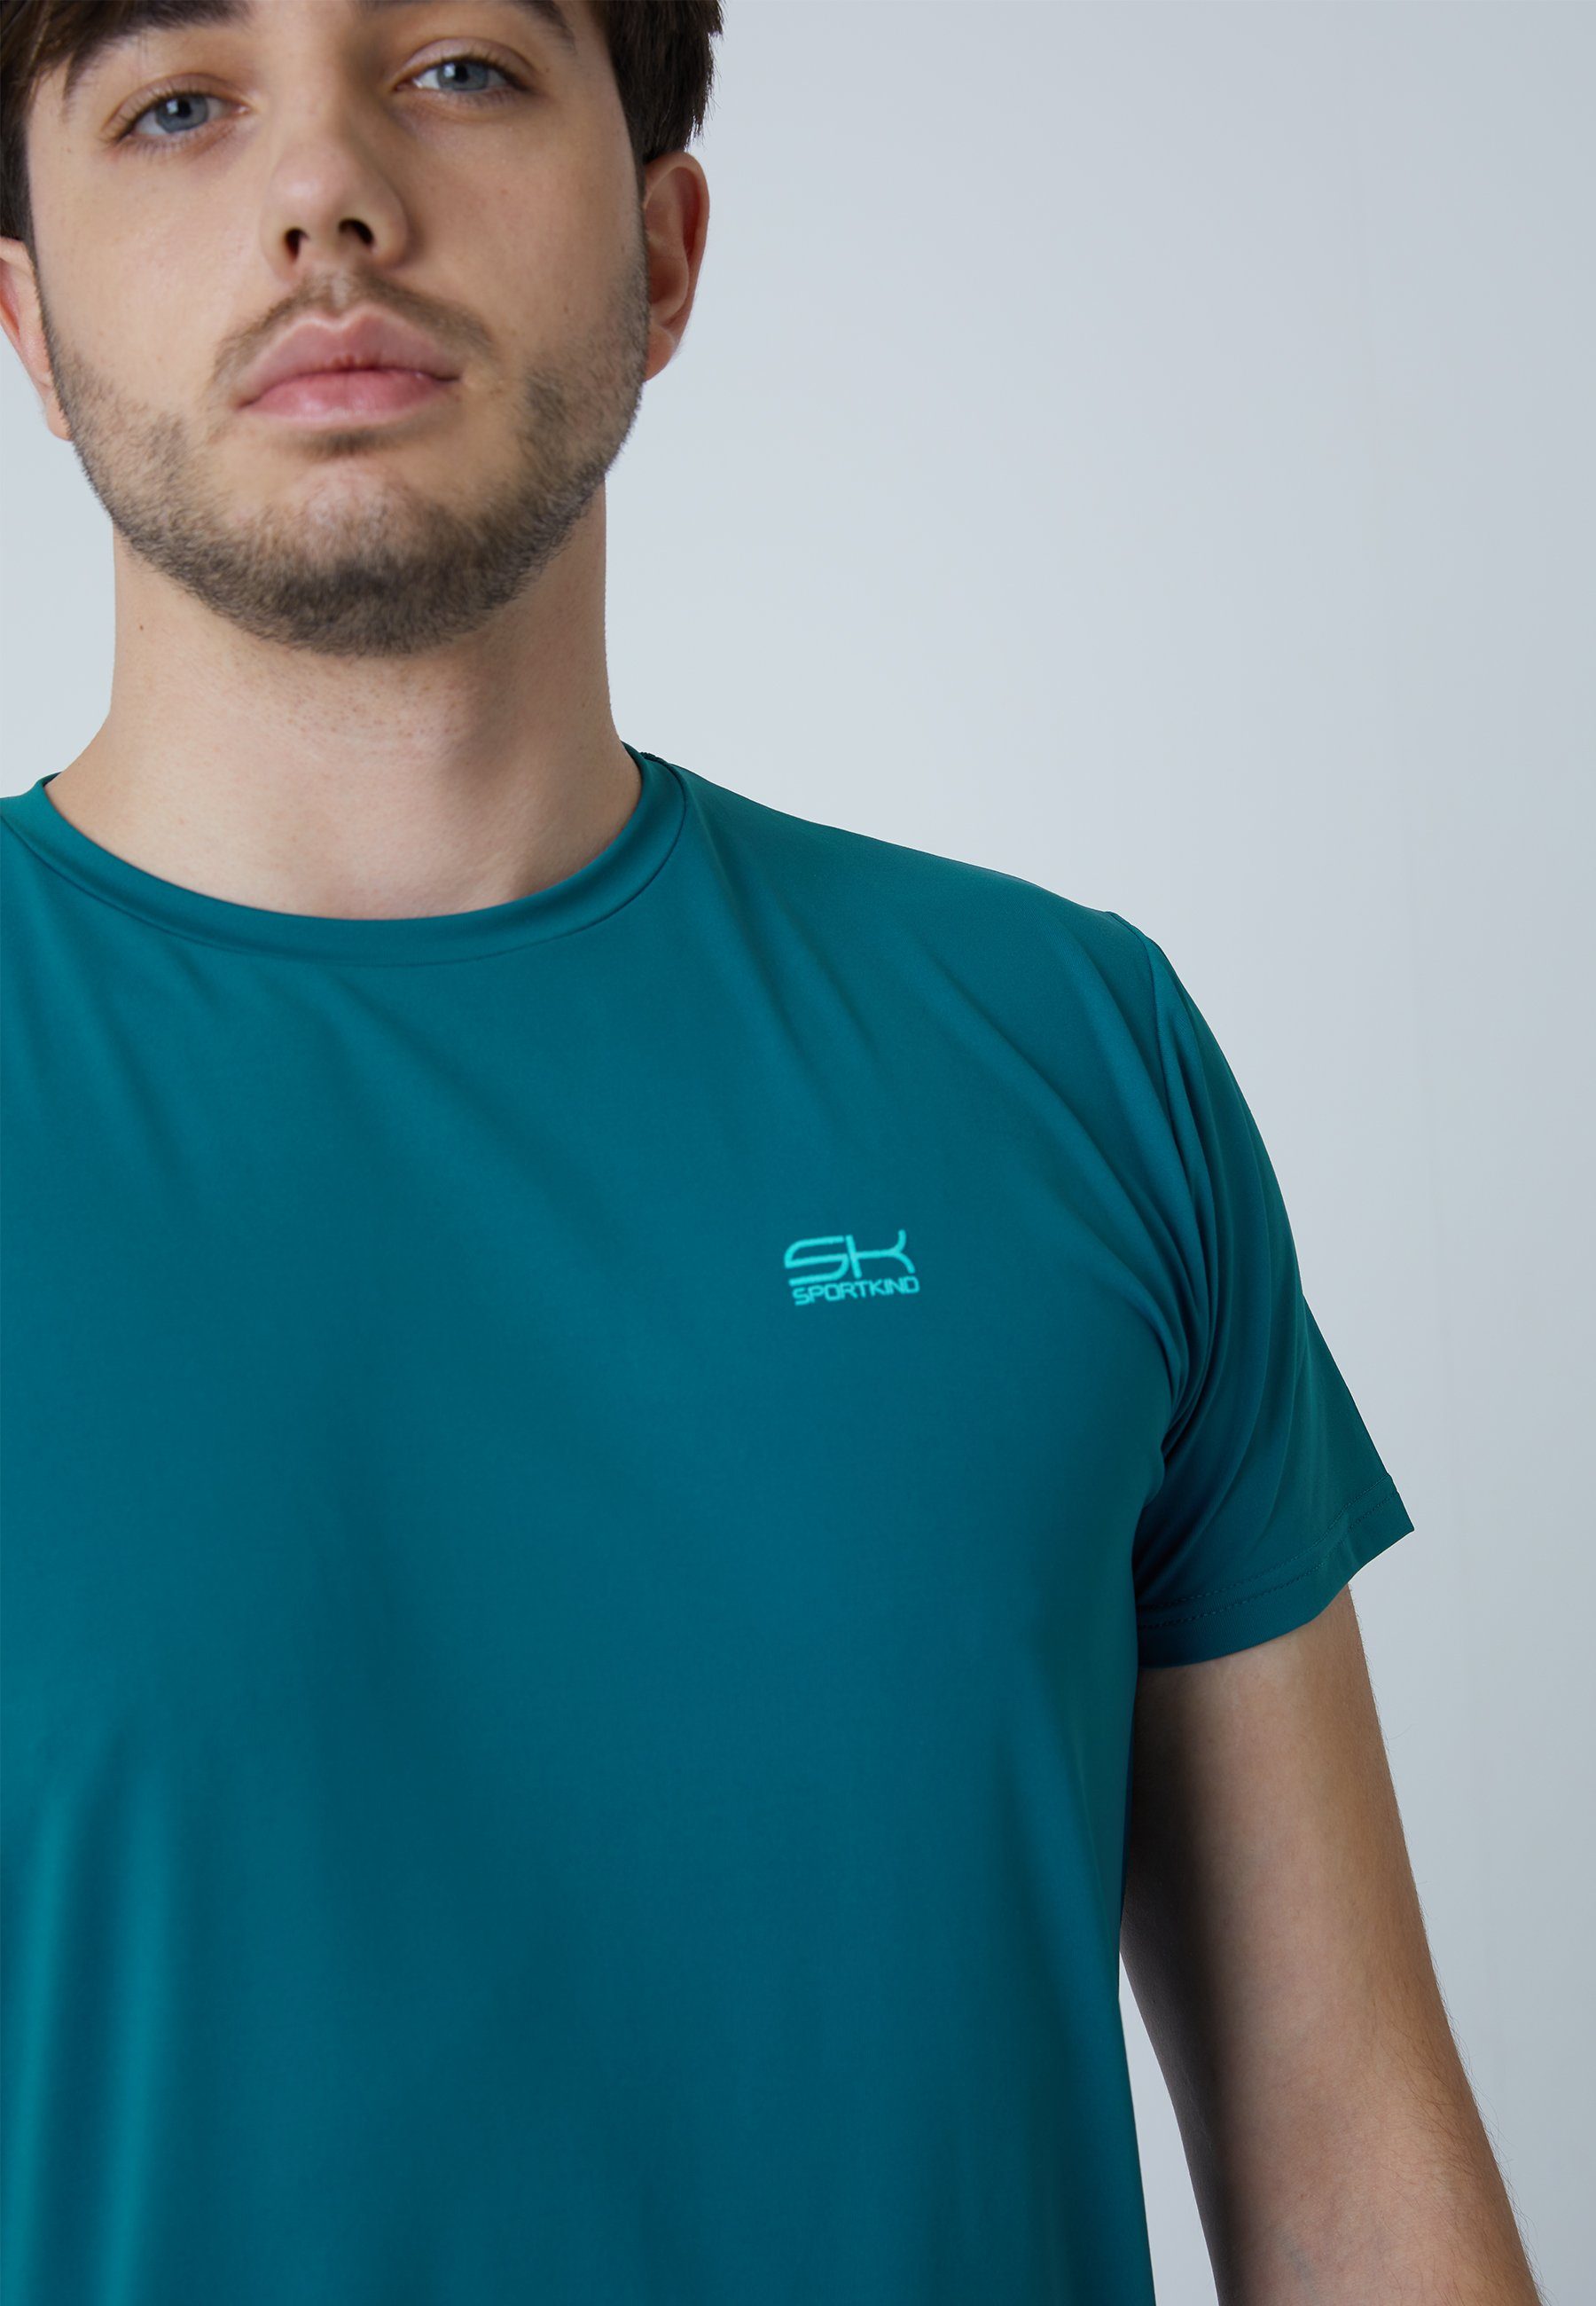 Herren petrol grün Rundhals Jungen Tennis SPORTKIND & T-Shirt Funktionsshirt